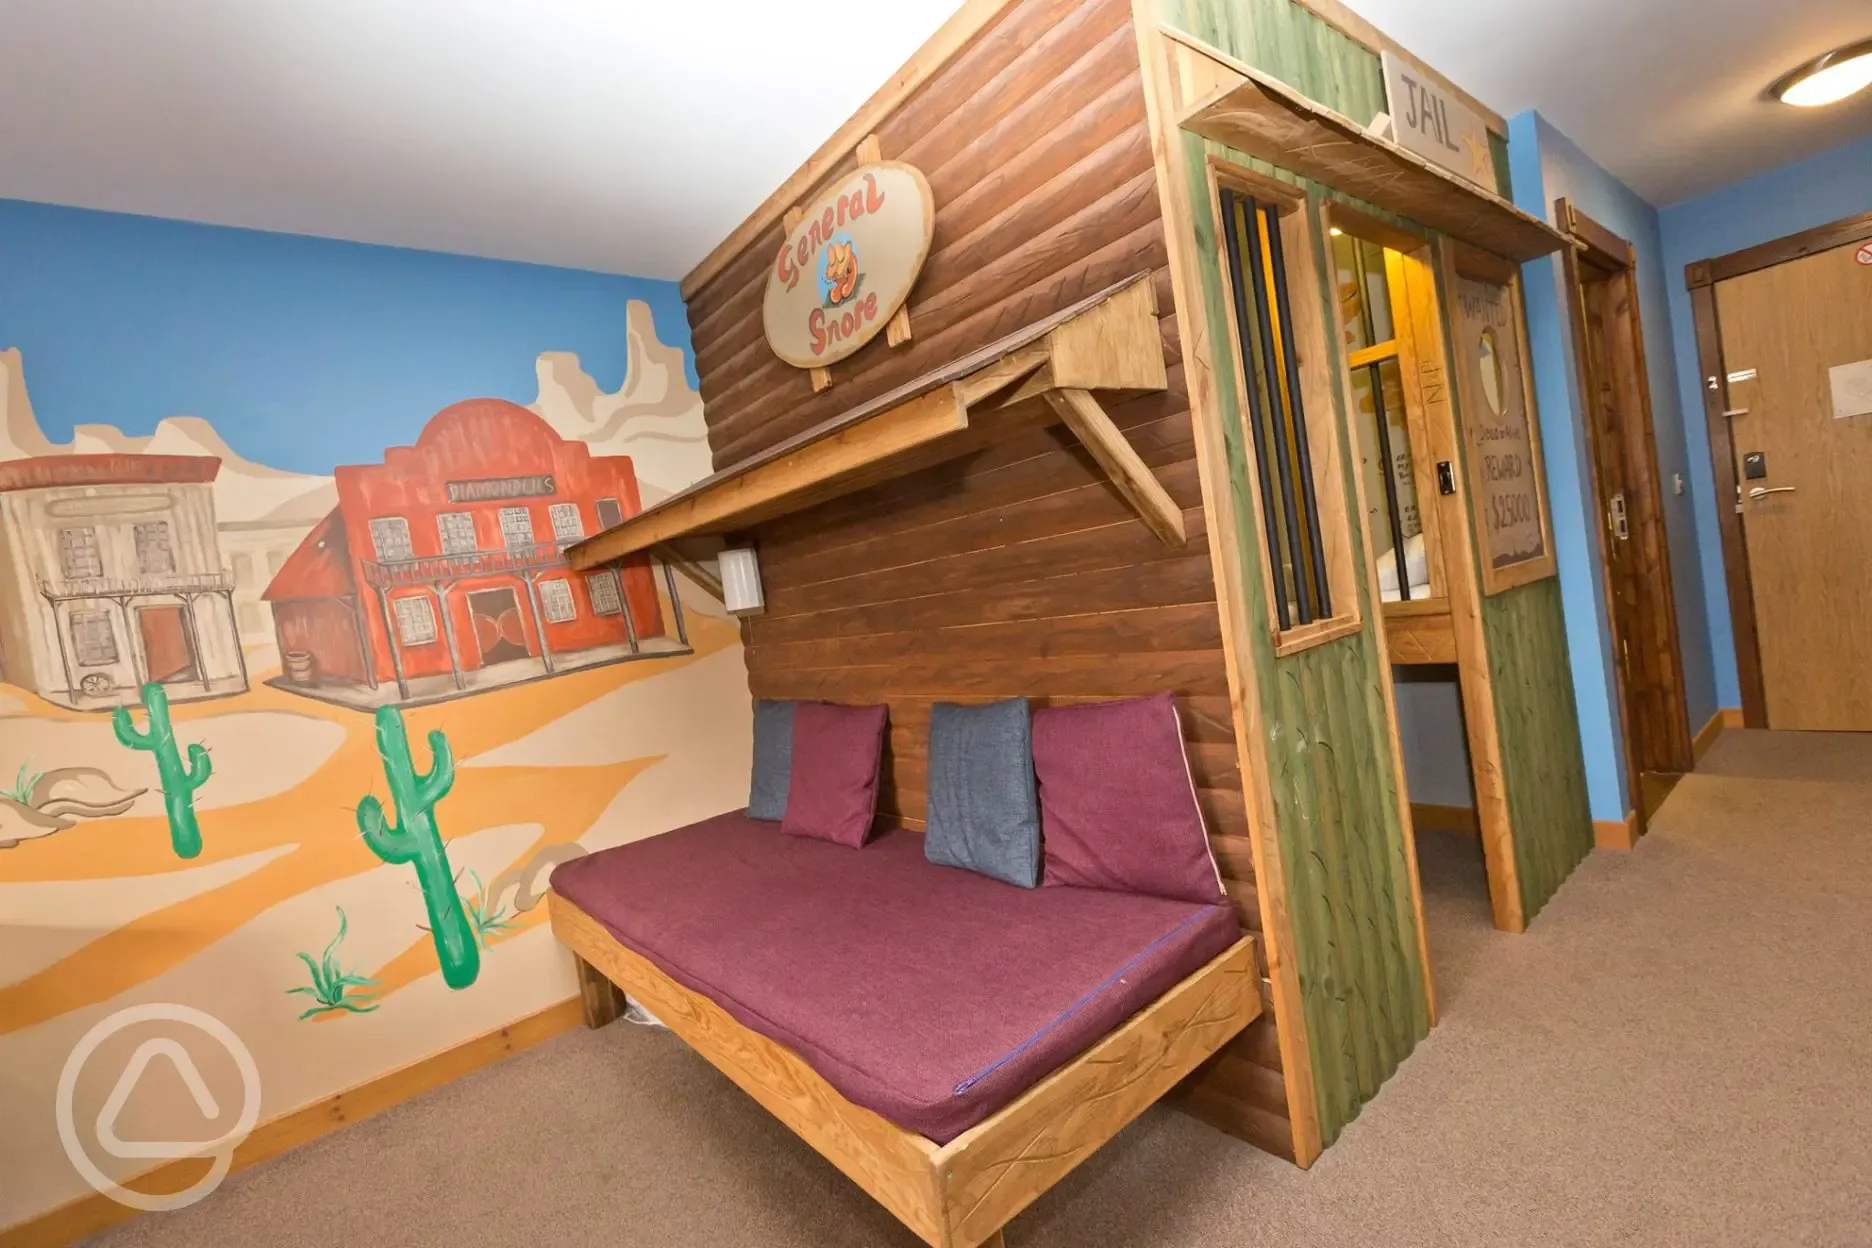 Wild West accommodation